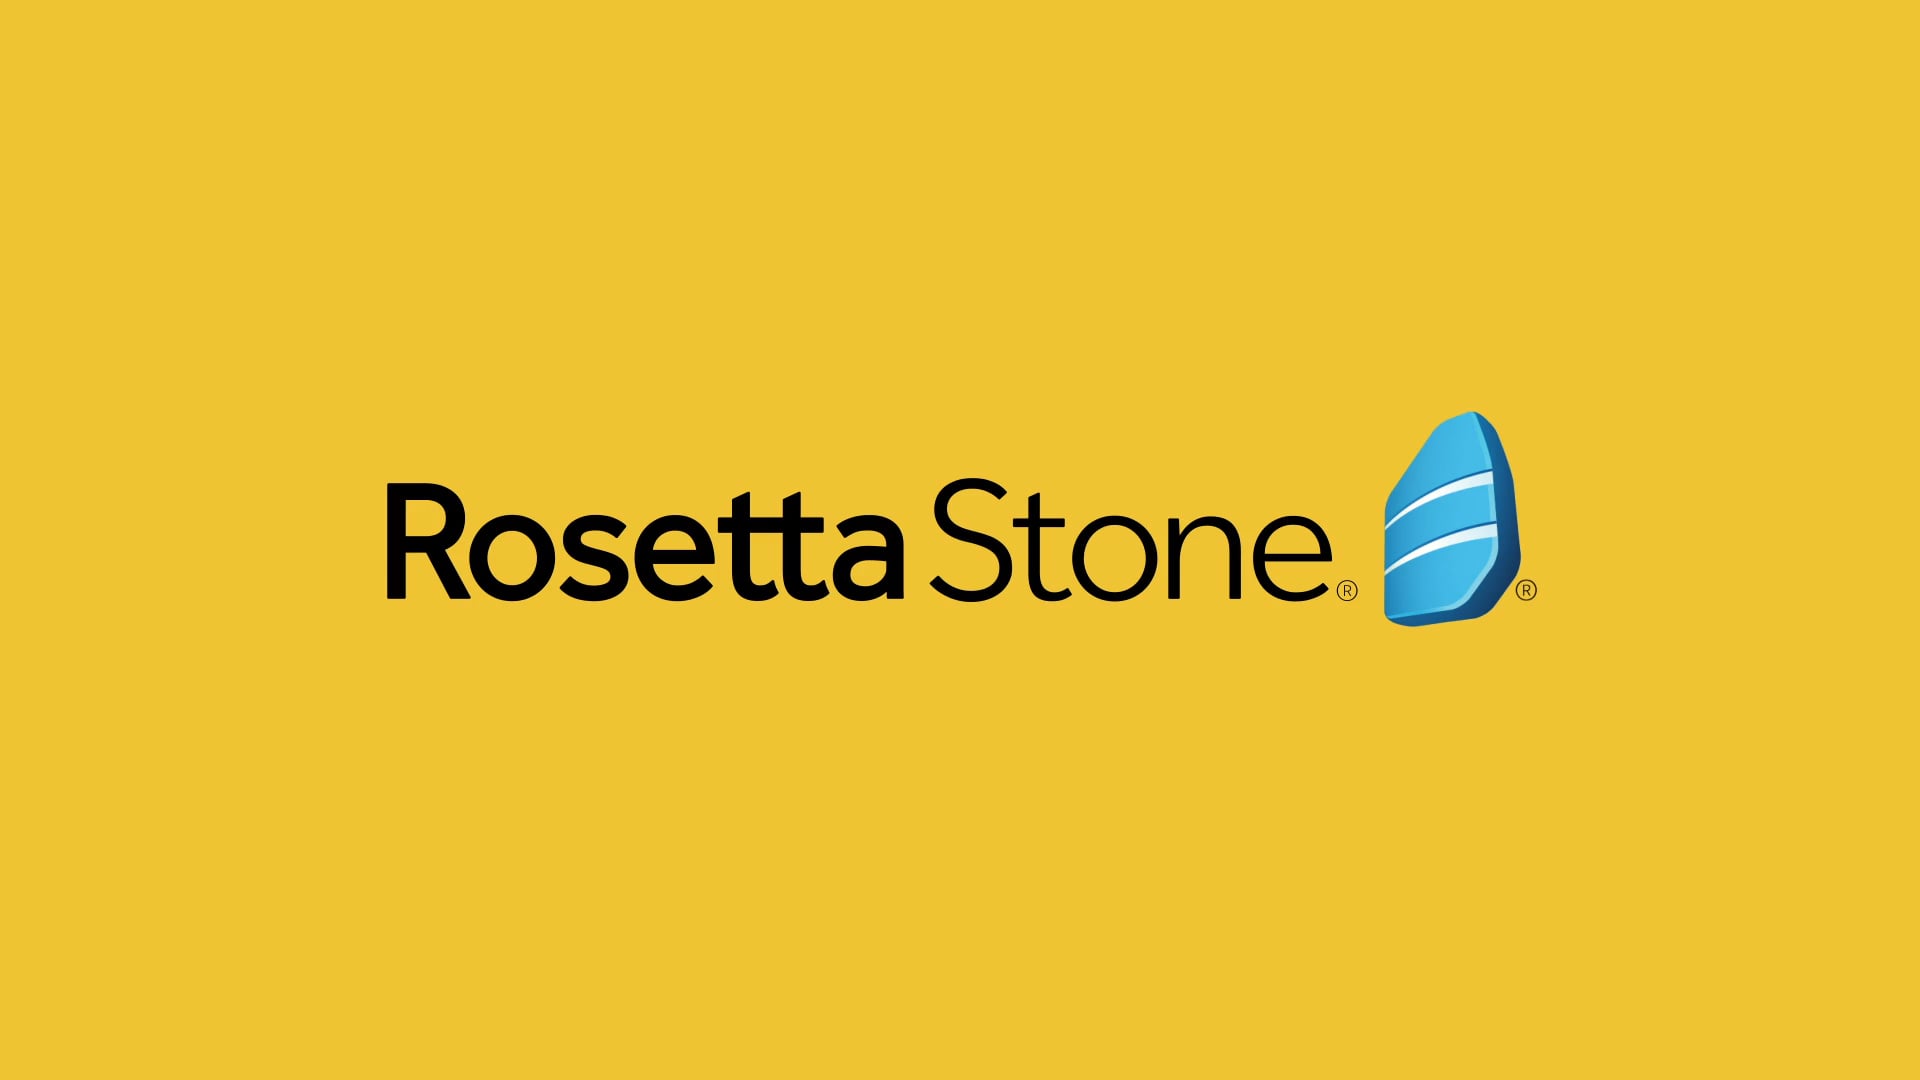 Rosetta Stone Transition Reel 2020